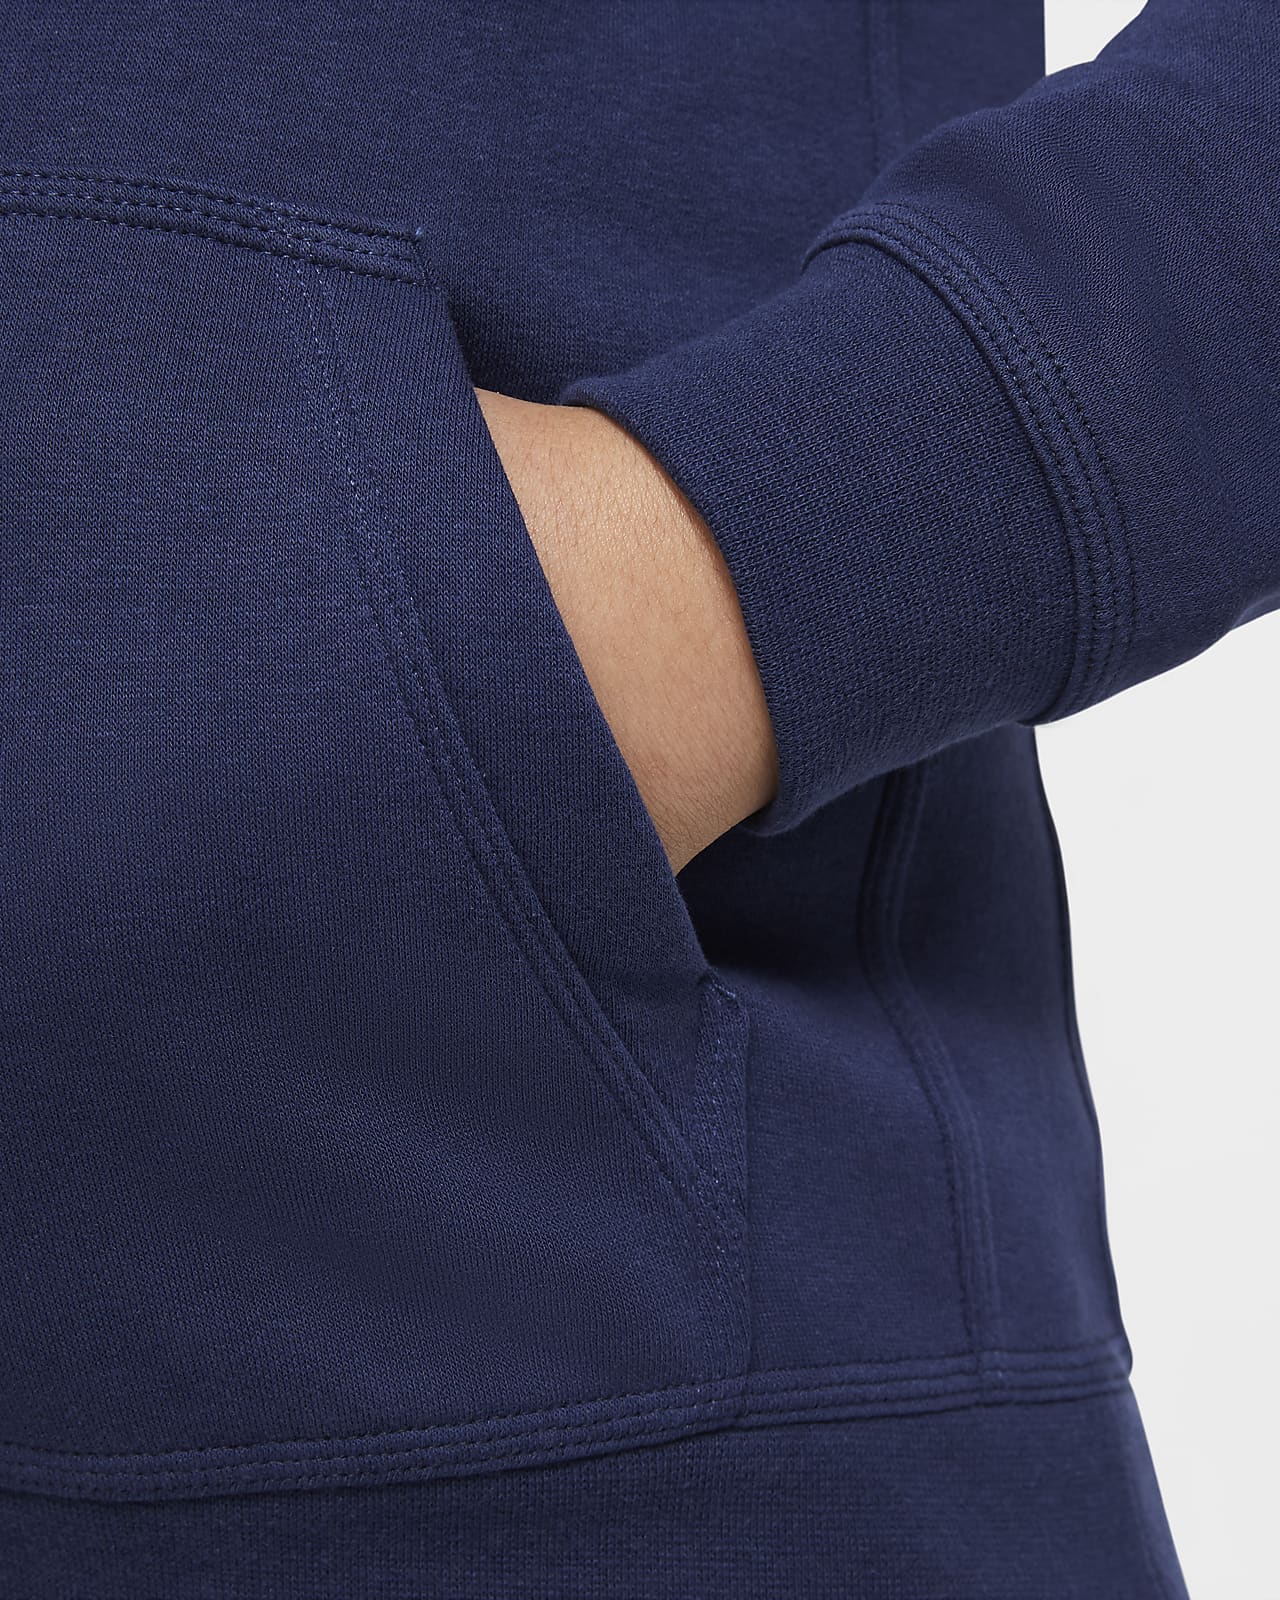 Navy Blue Zippy sweatshirt KIDS FASHION Jumpers & Sweatshirts Hoodie discount 80% 